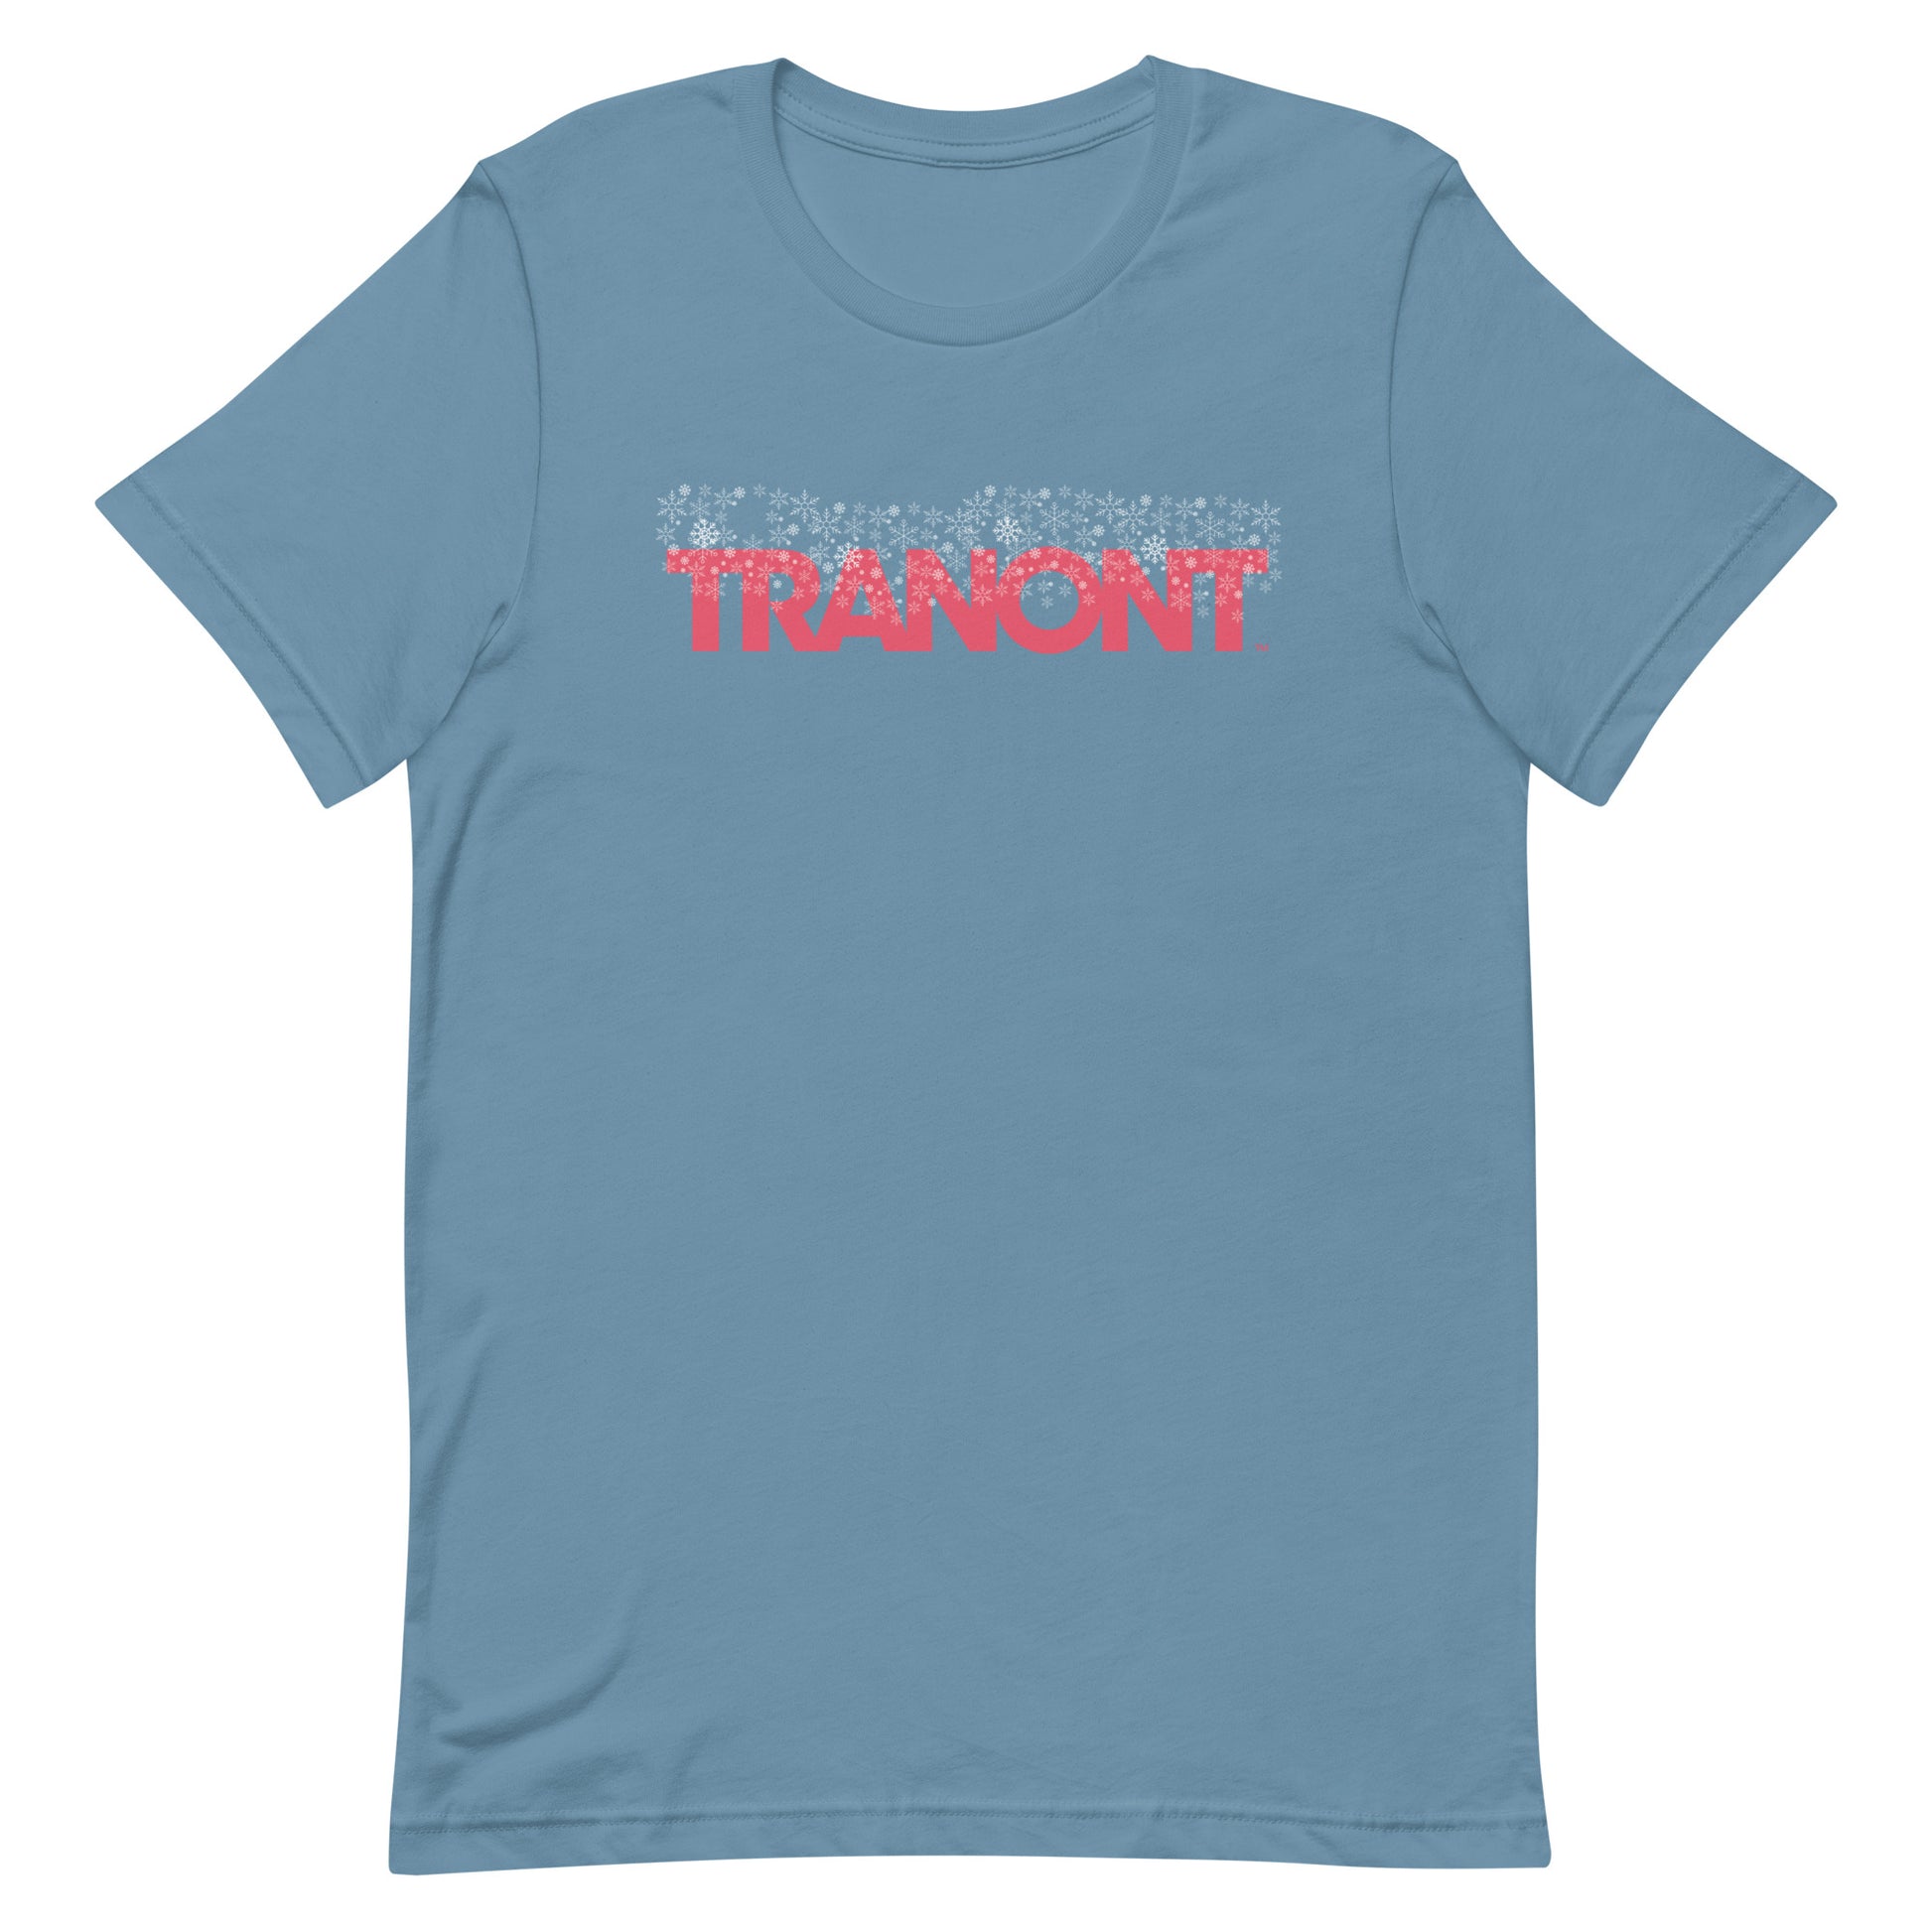 Tranont snowflake - Unisex t-shirt – Tranont Swag Store